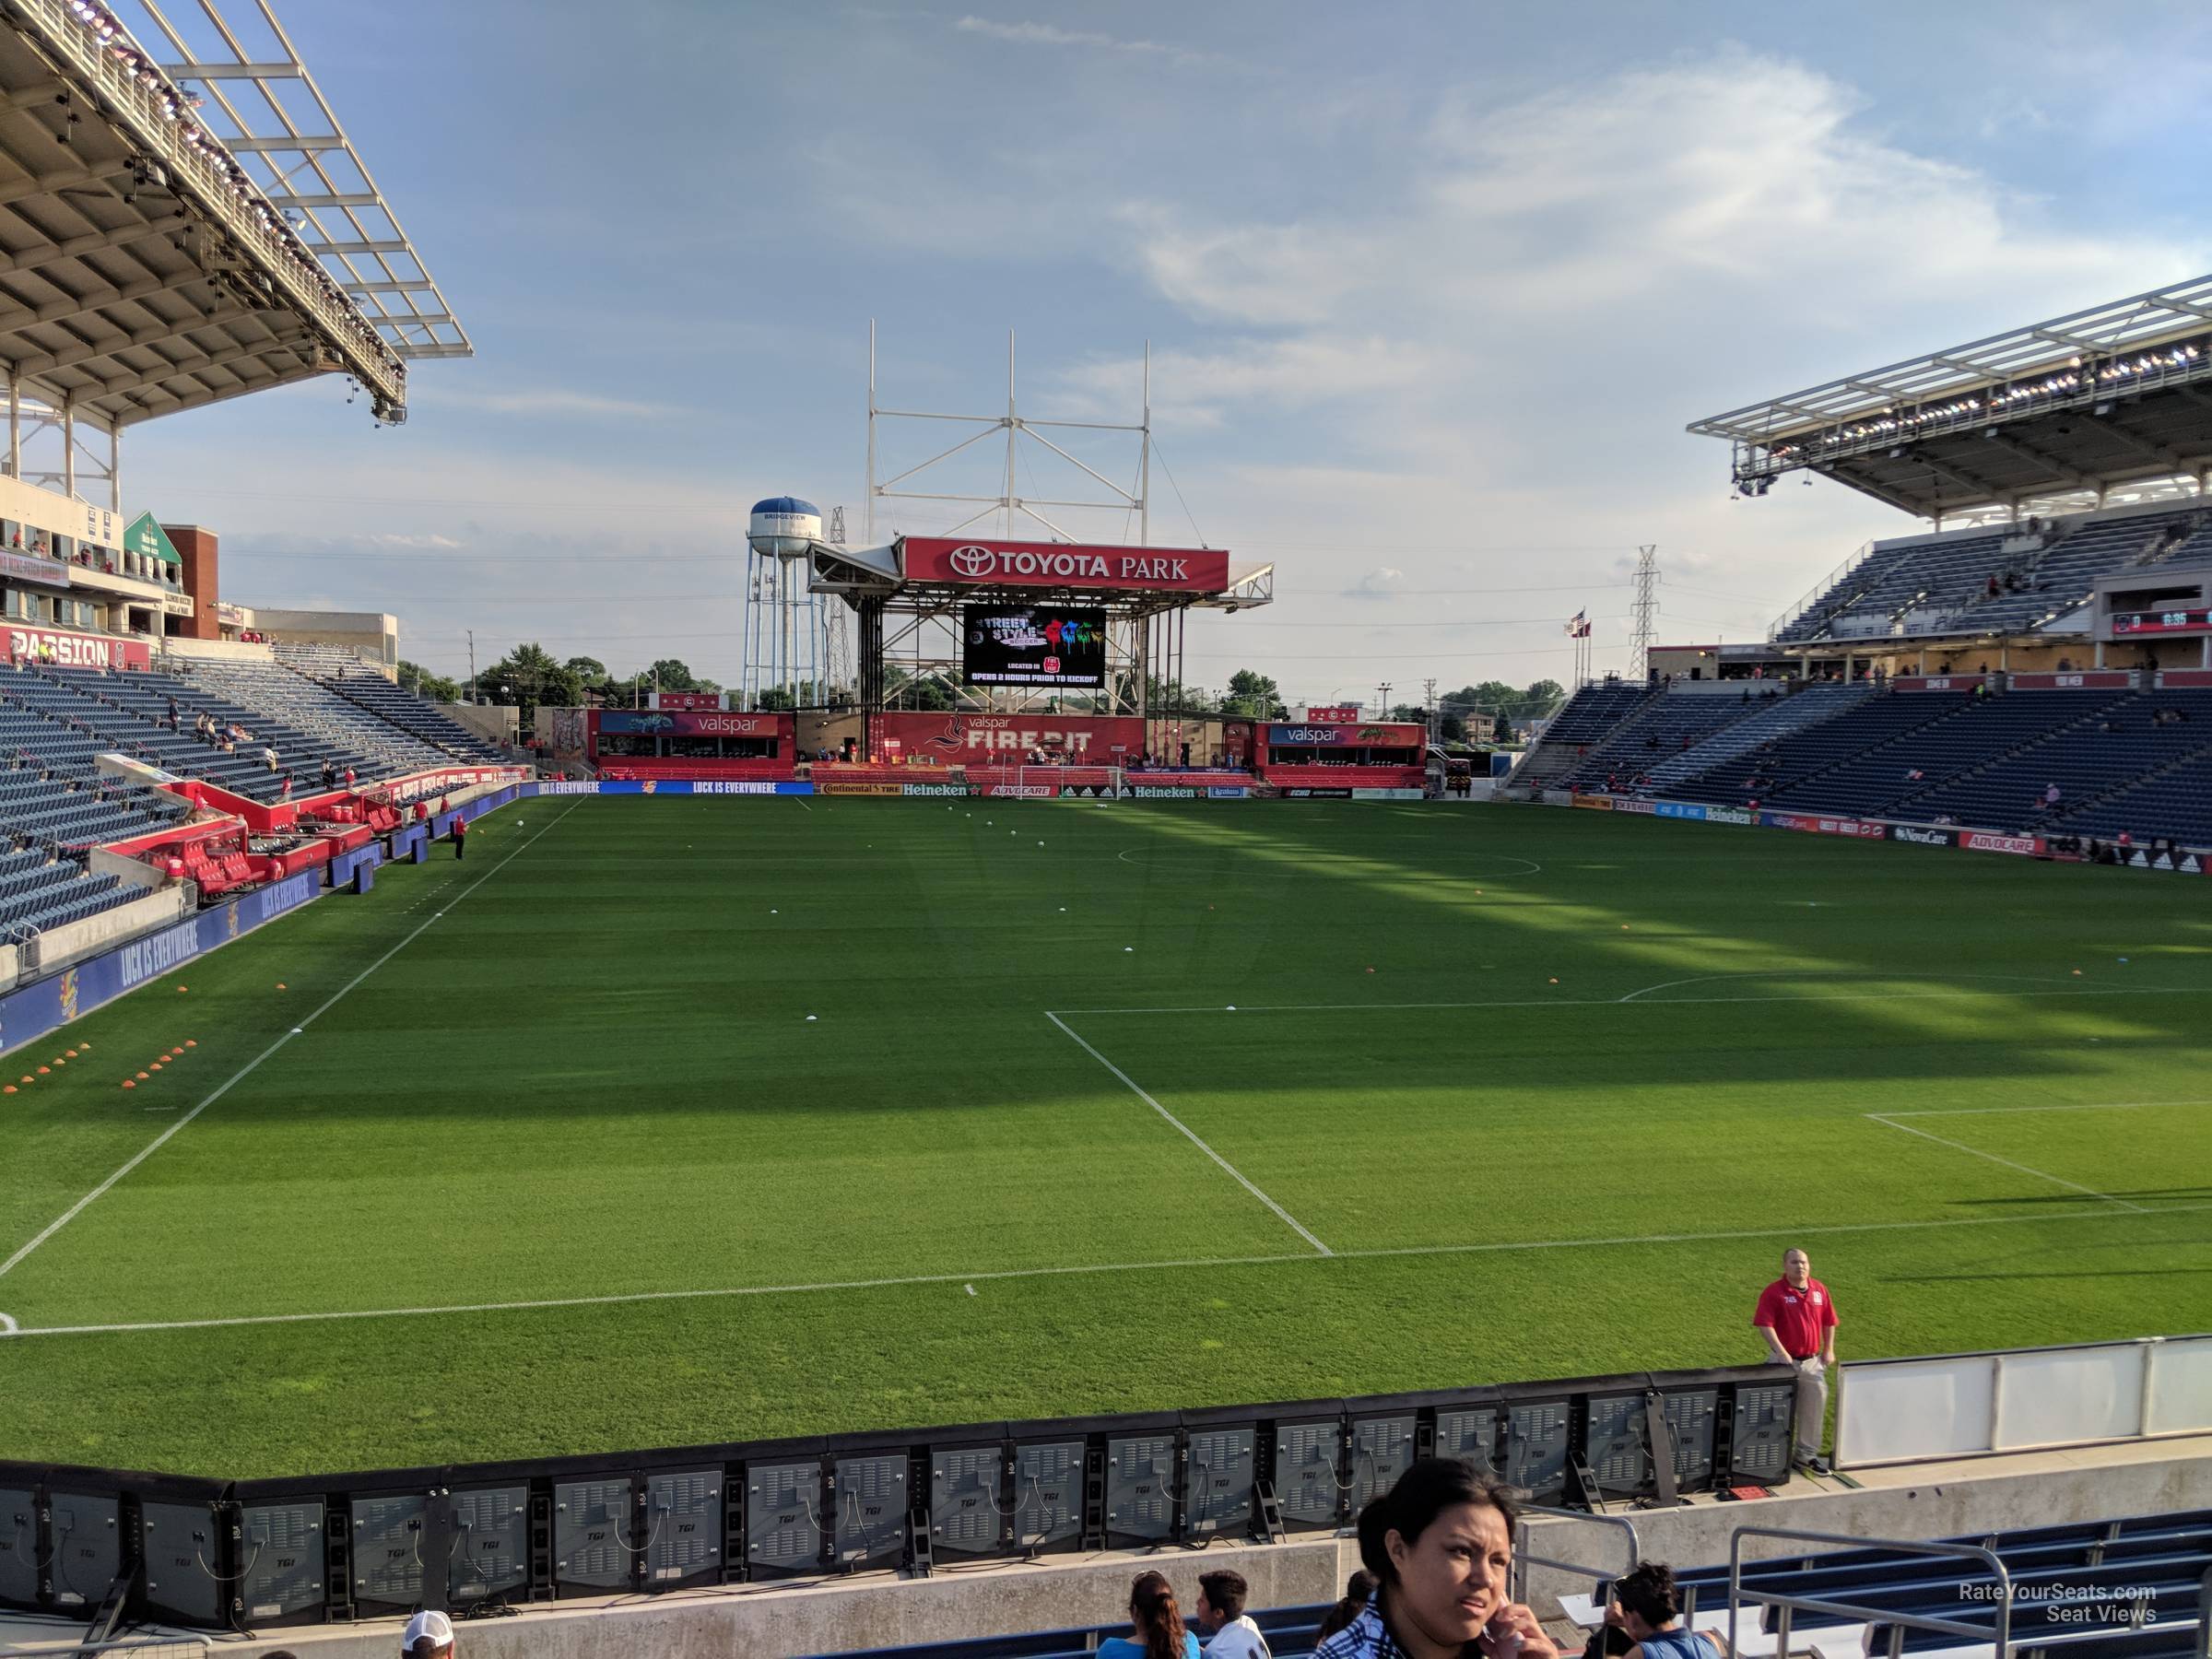 section 120, row 13 seat view  - seatgeek stadium